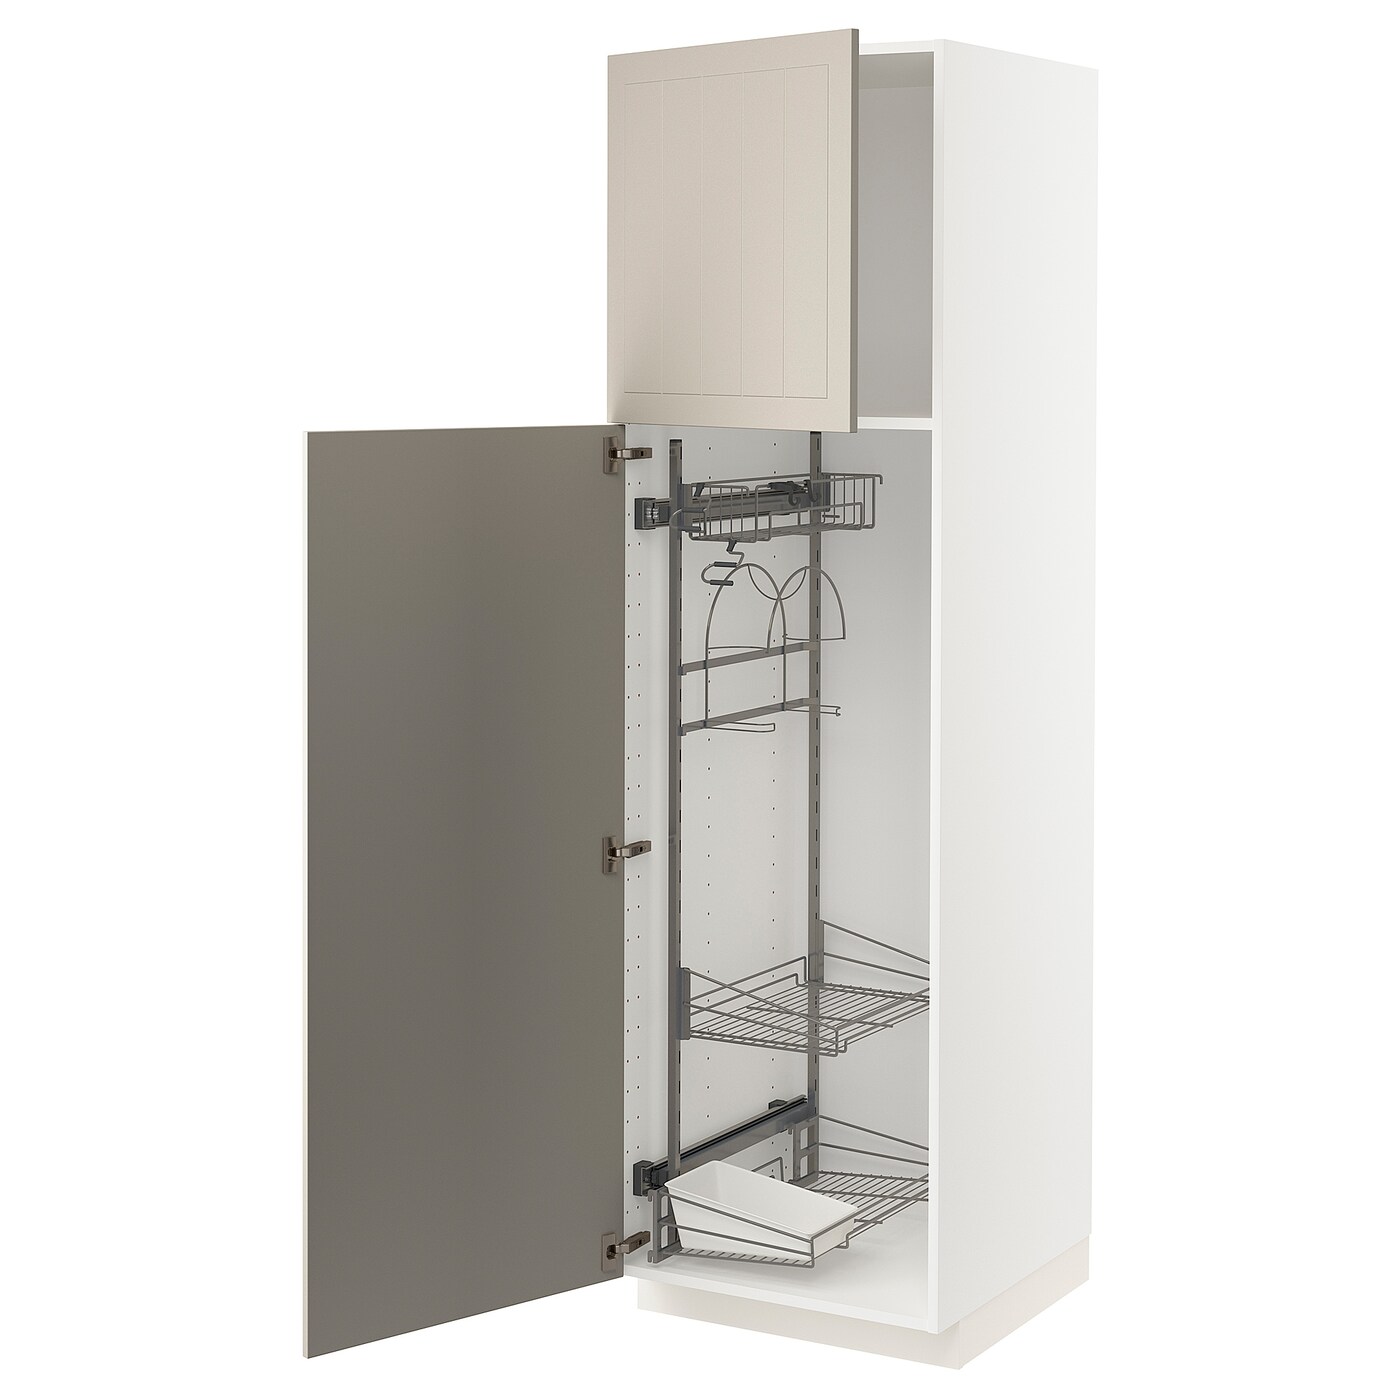 Высокий шкаф/бытовой - IKEA METOD/МЕТОД ИКЕА, 200х60х60 см, белый/бежевый